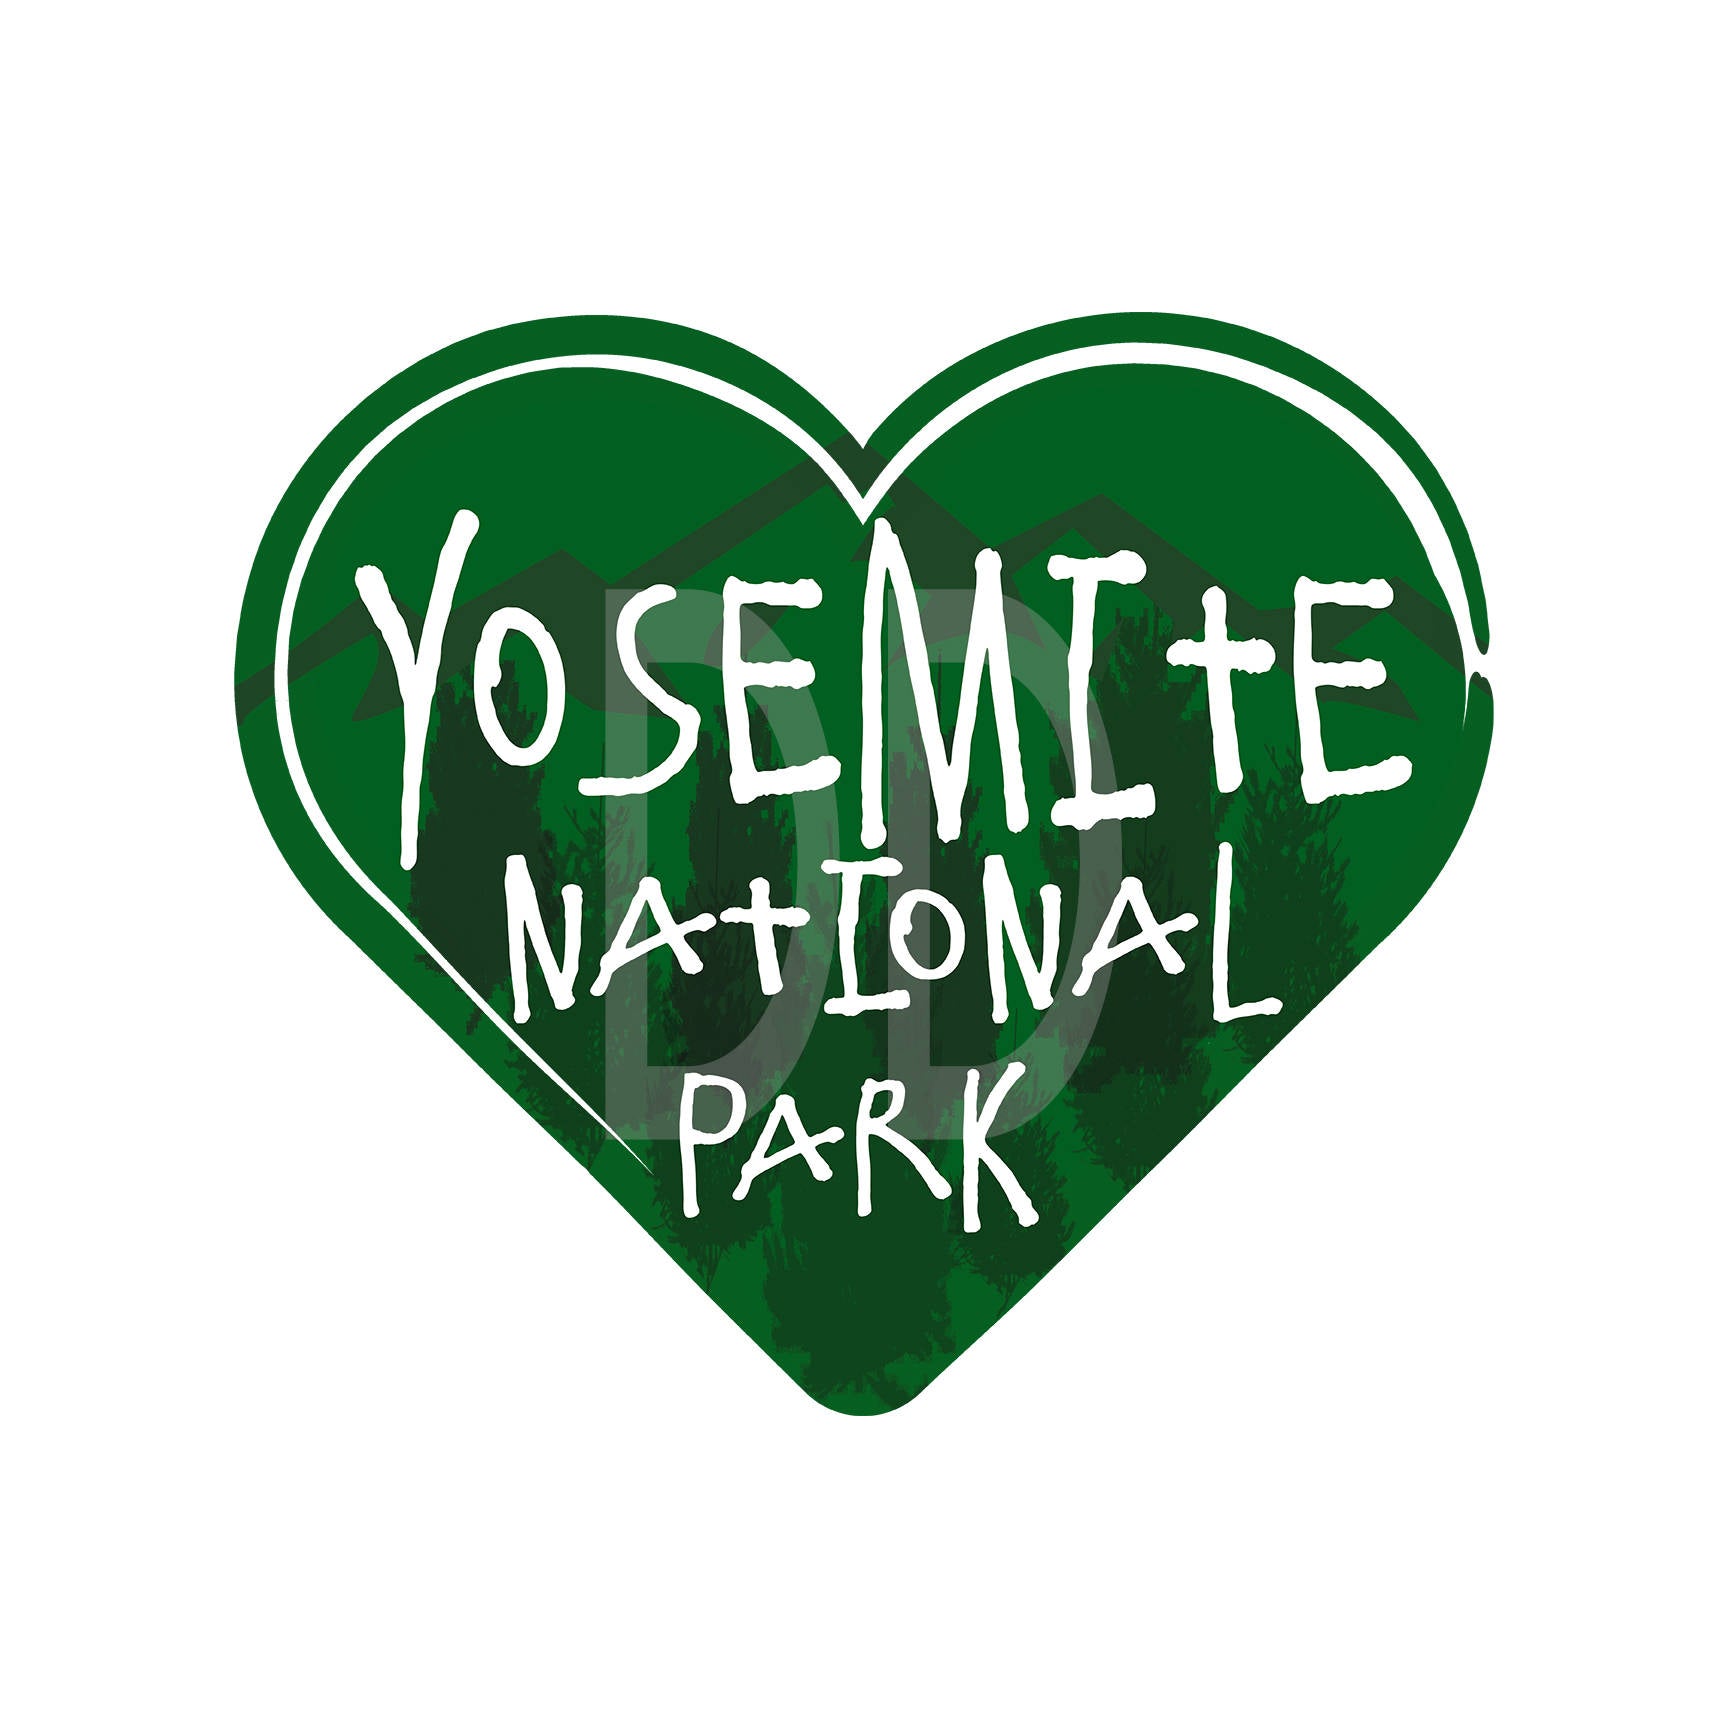 YOSEMITE NATIONAL PARK California 3.2" X 2.8" Vinyl Sticker Decal Mountain Hiking Camping Climbing